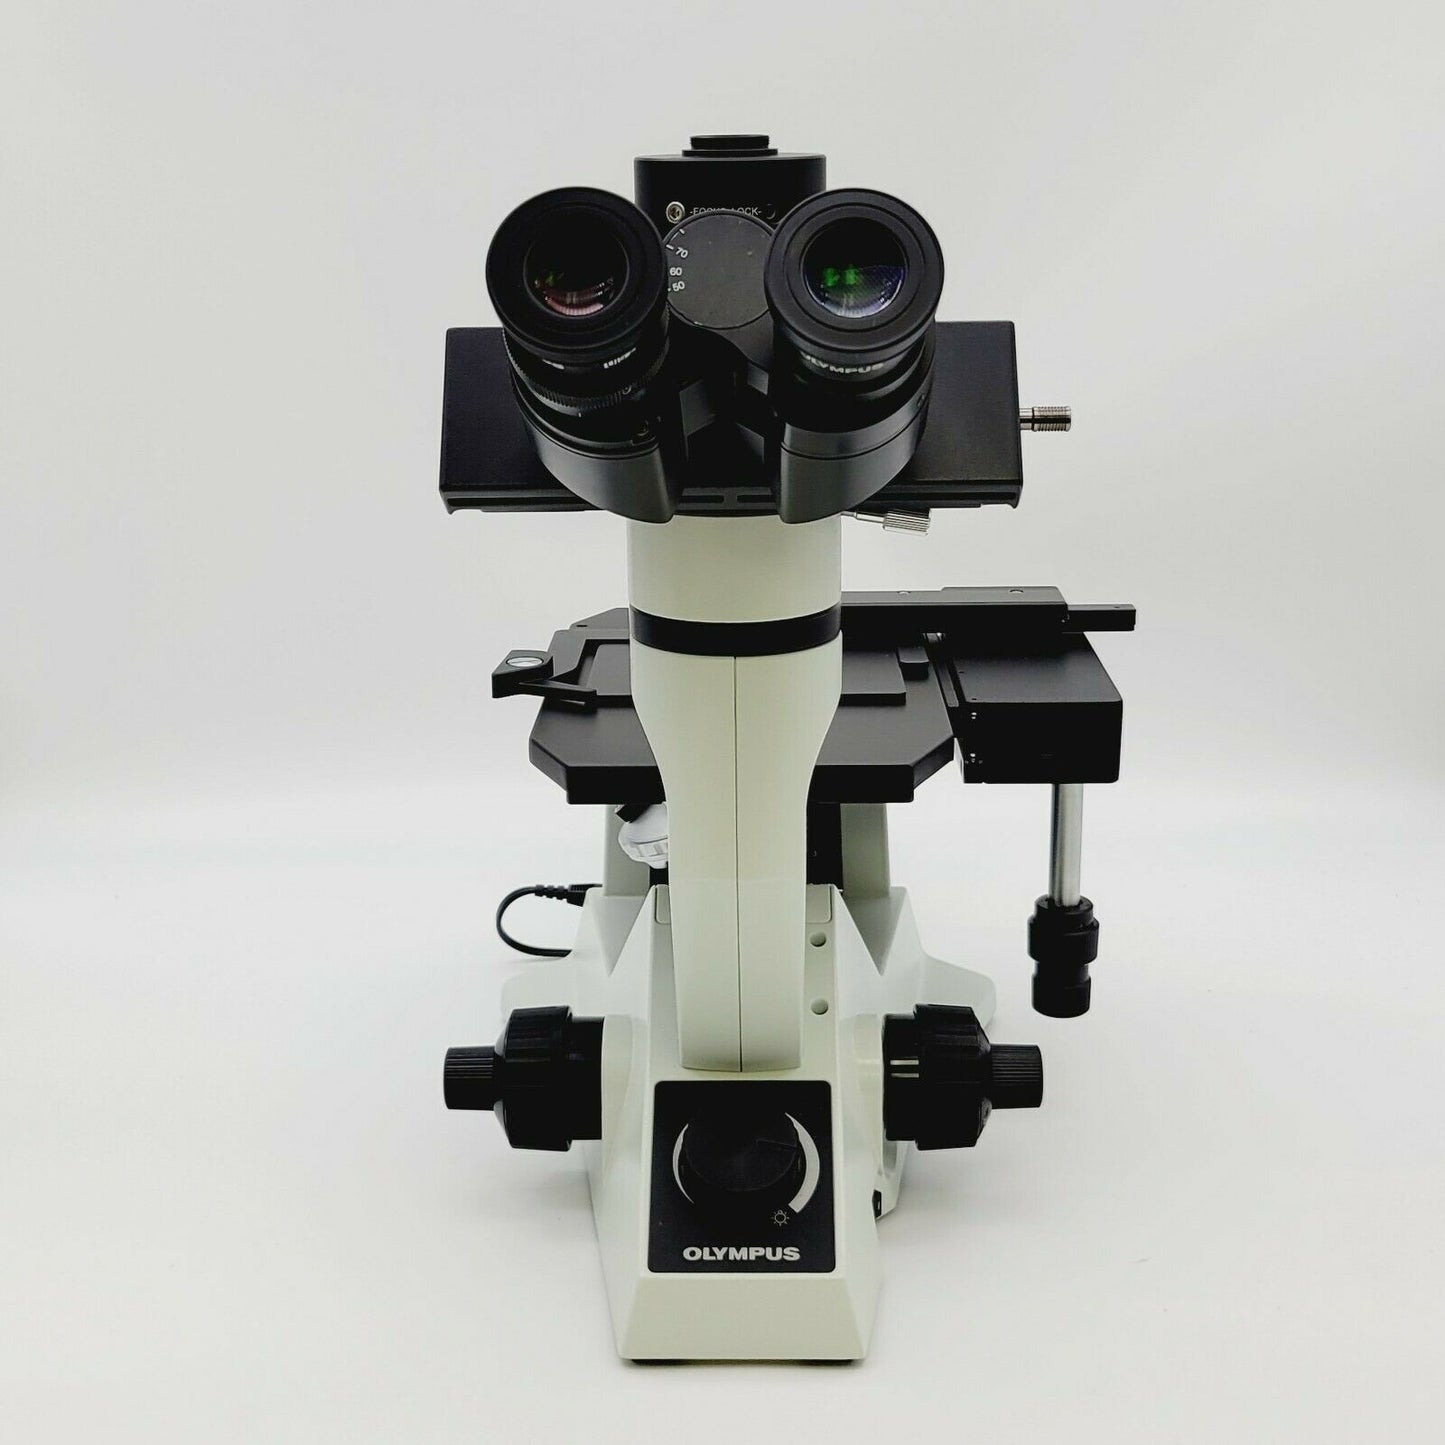 Olympus Microscope GX41 Metallurgical with Trinocular Head - microscopemarketplace